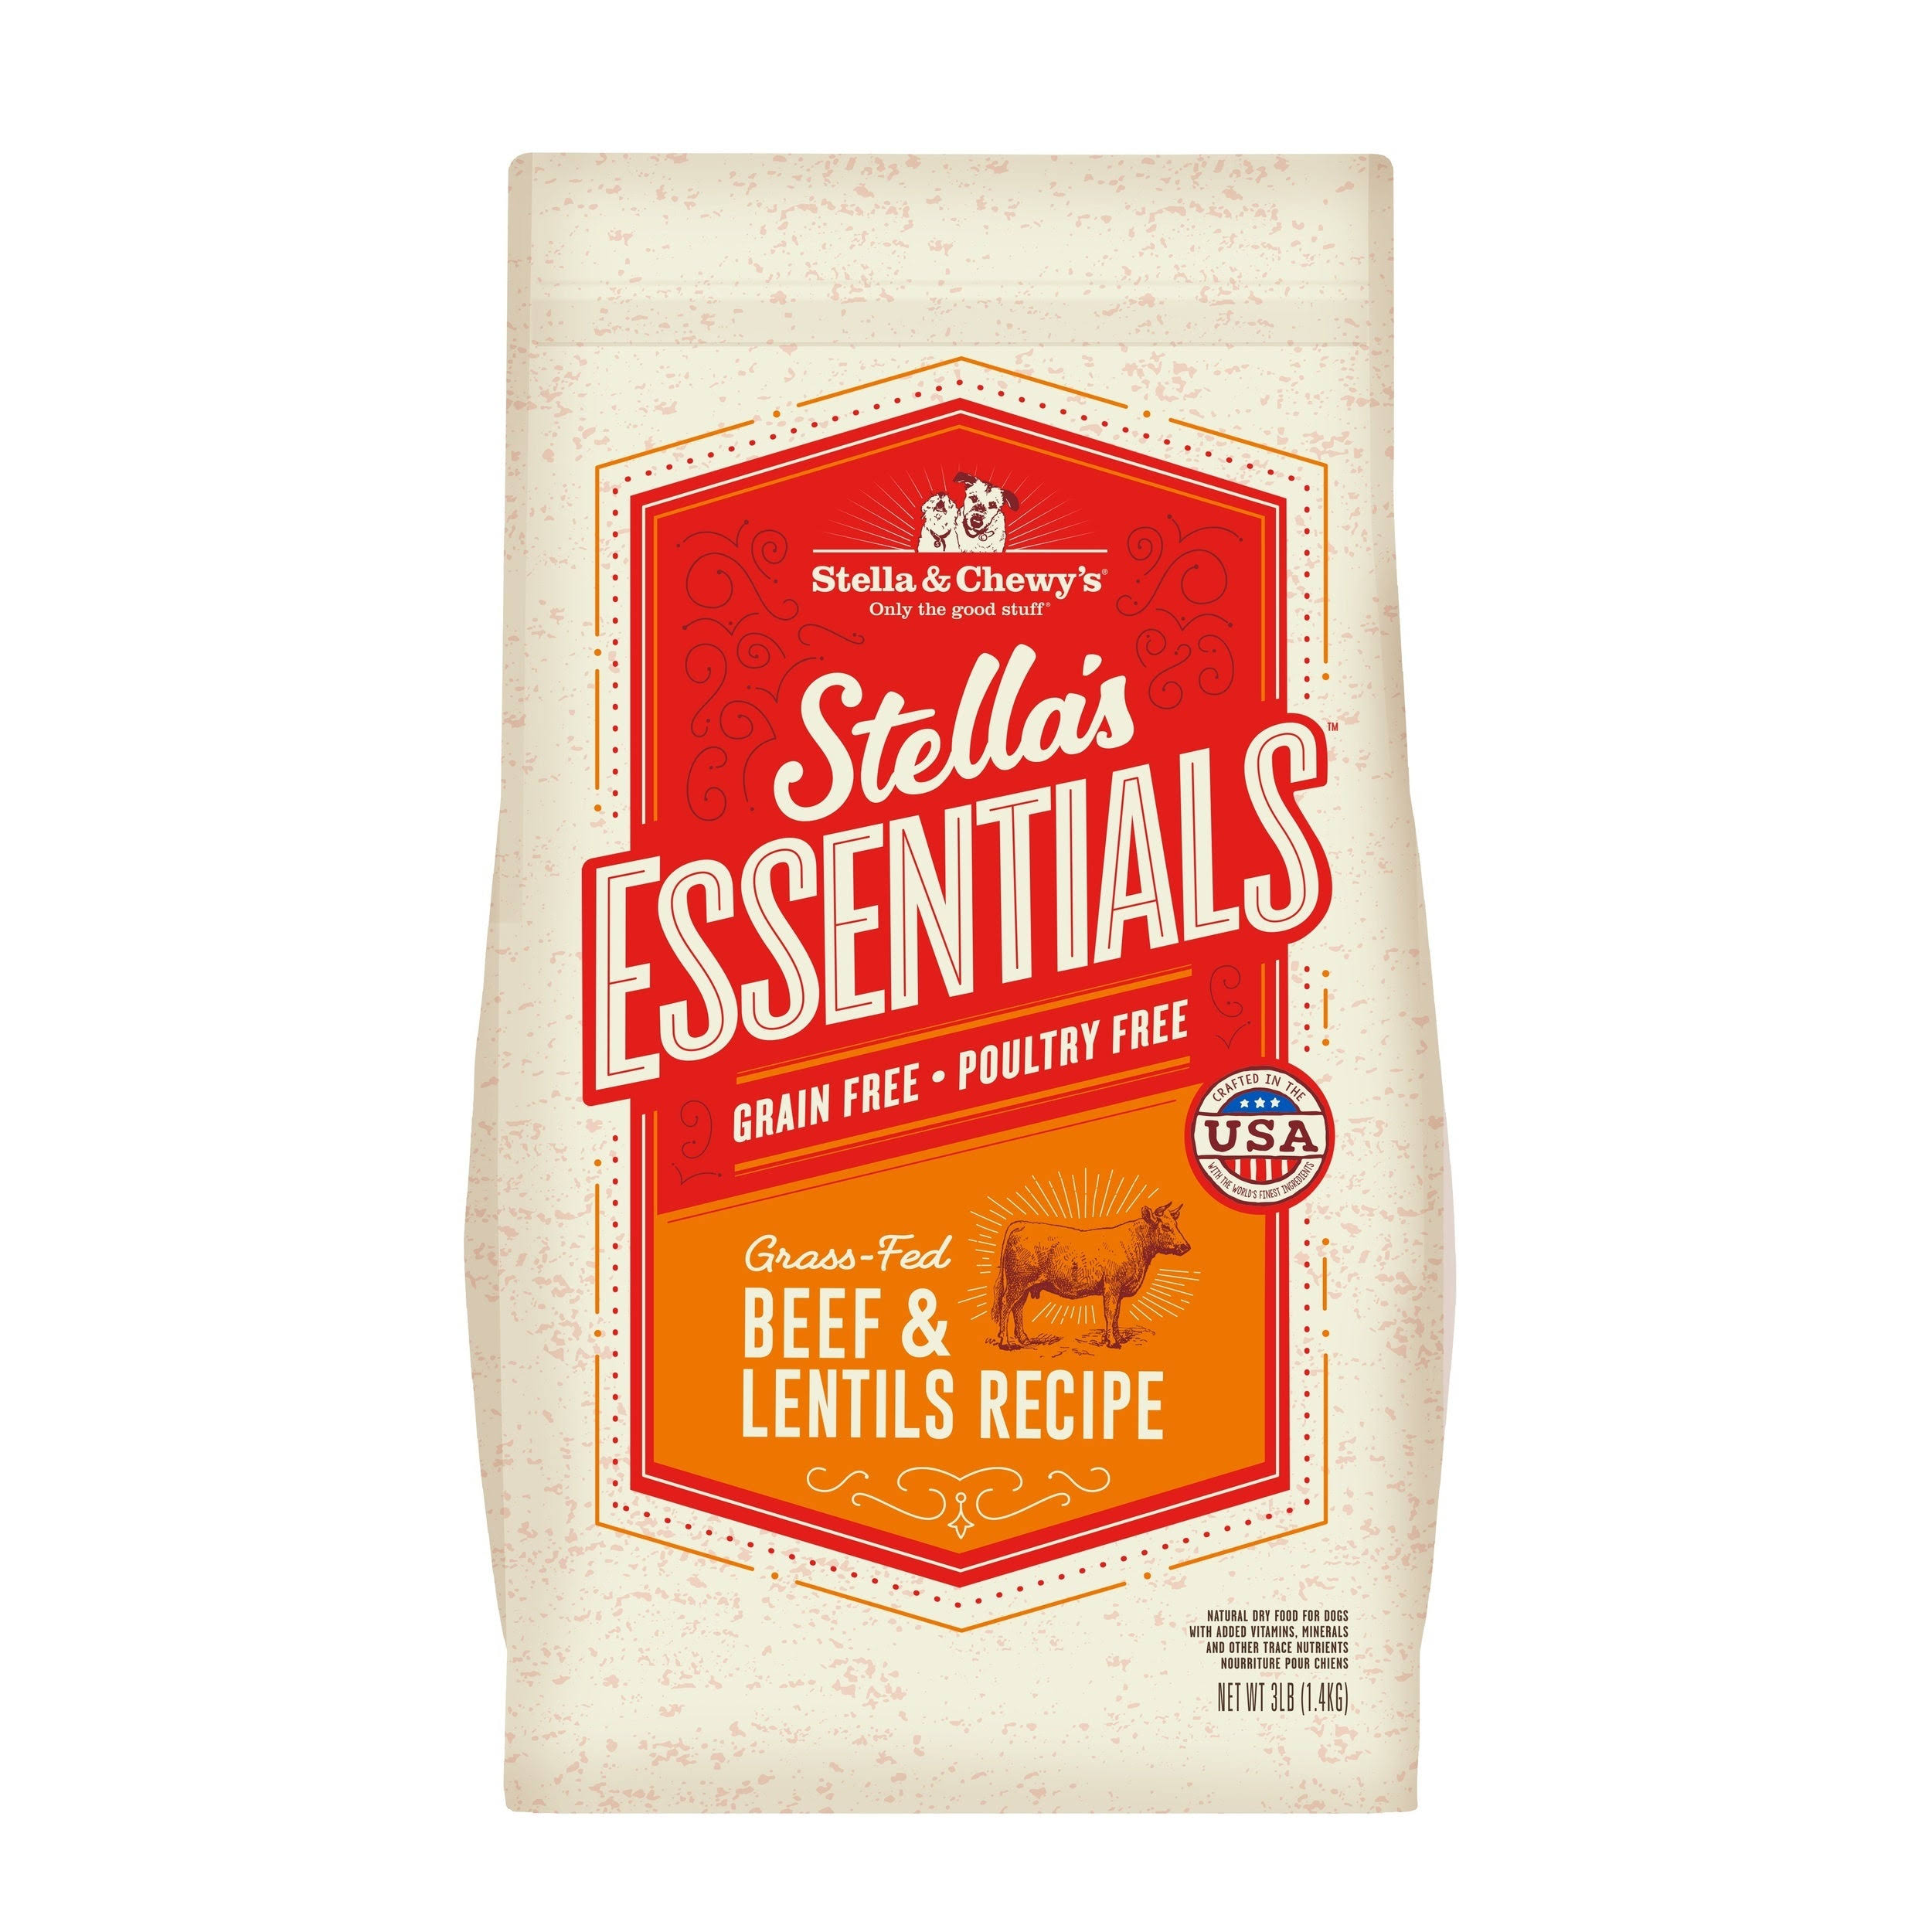 Stella Essentials Grain-Free Grass-Fed Beef & Lentils Recipe 25 lbs